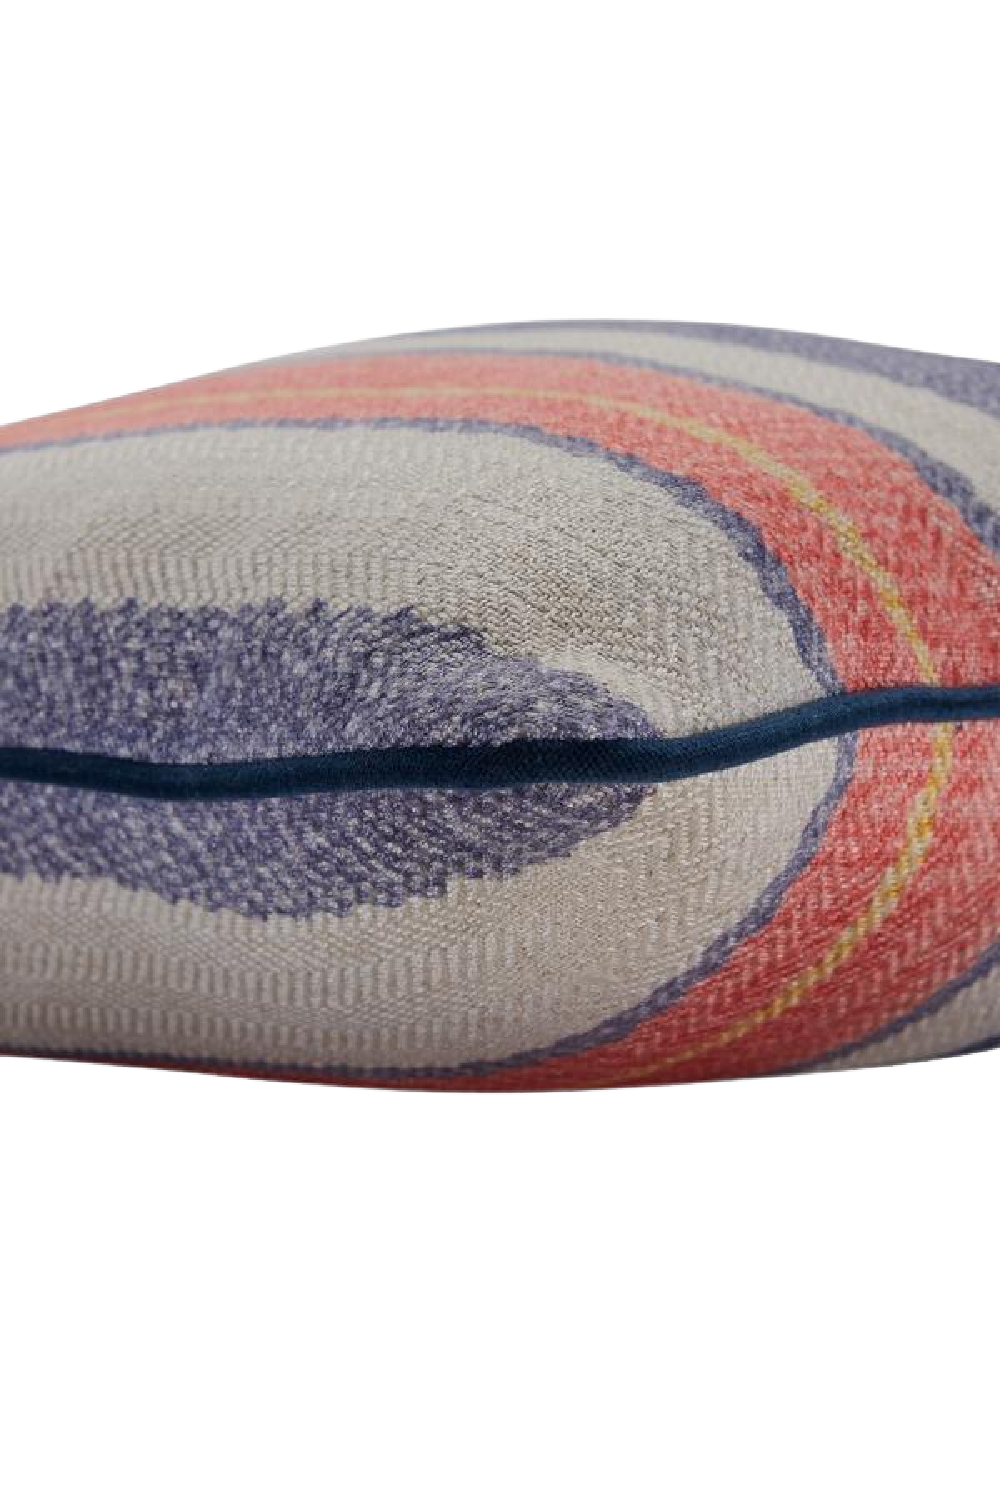 Multi-toned Cushion Piped with Gray Velvet | Andrew Martin Elbrus